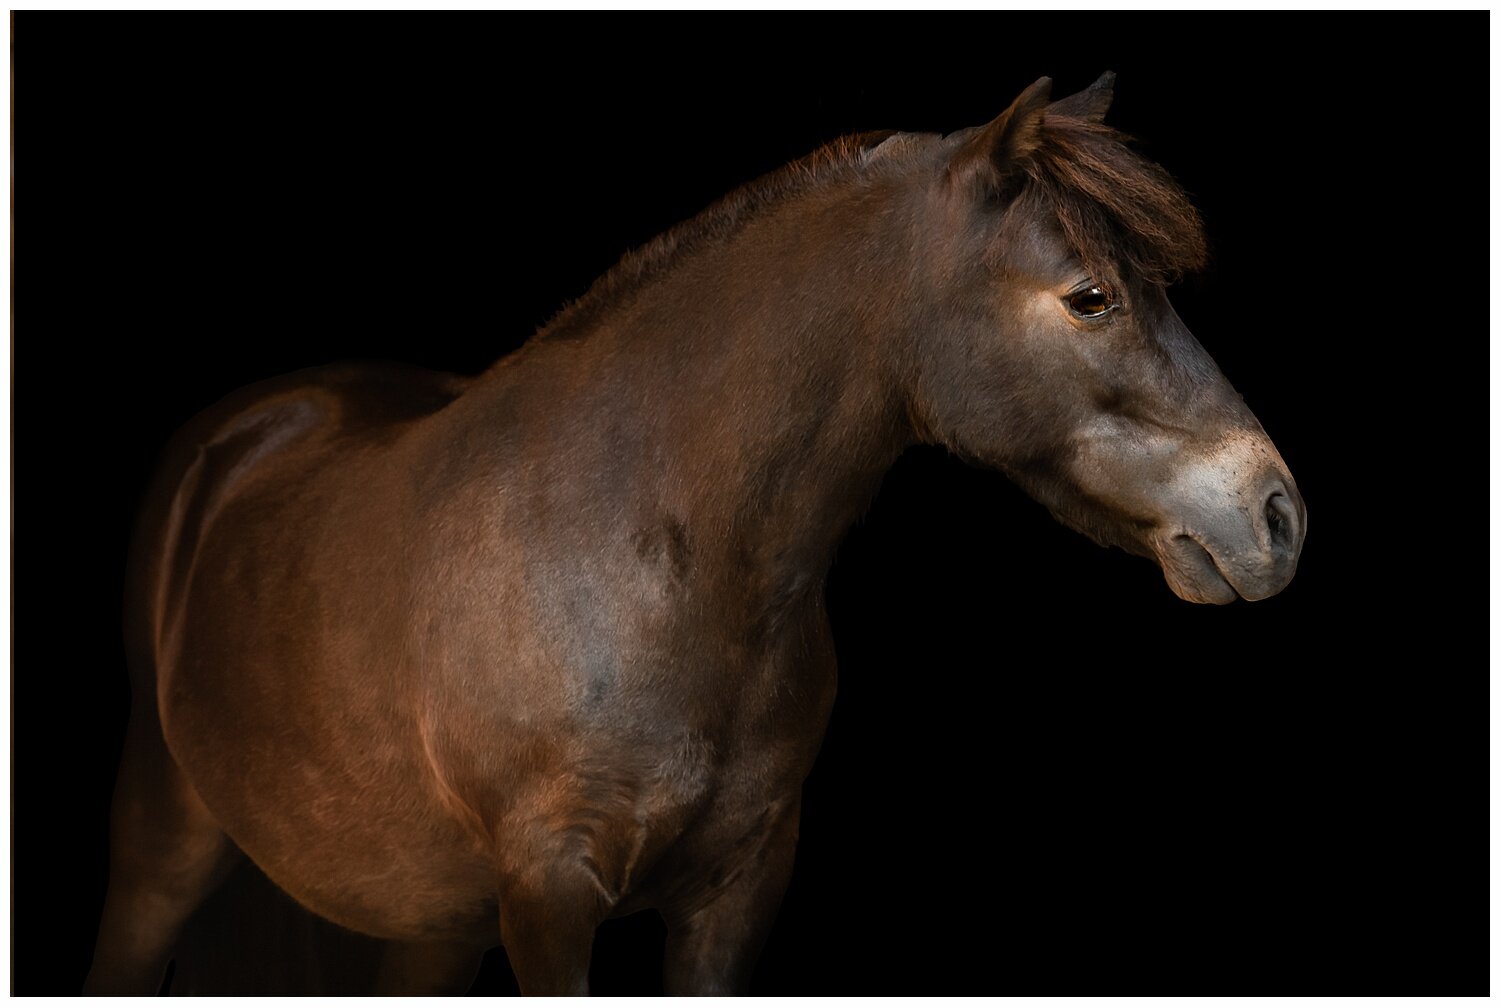  American miniature horse on a black background portrait 